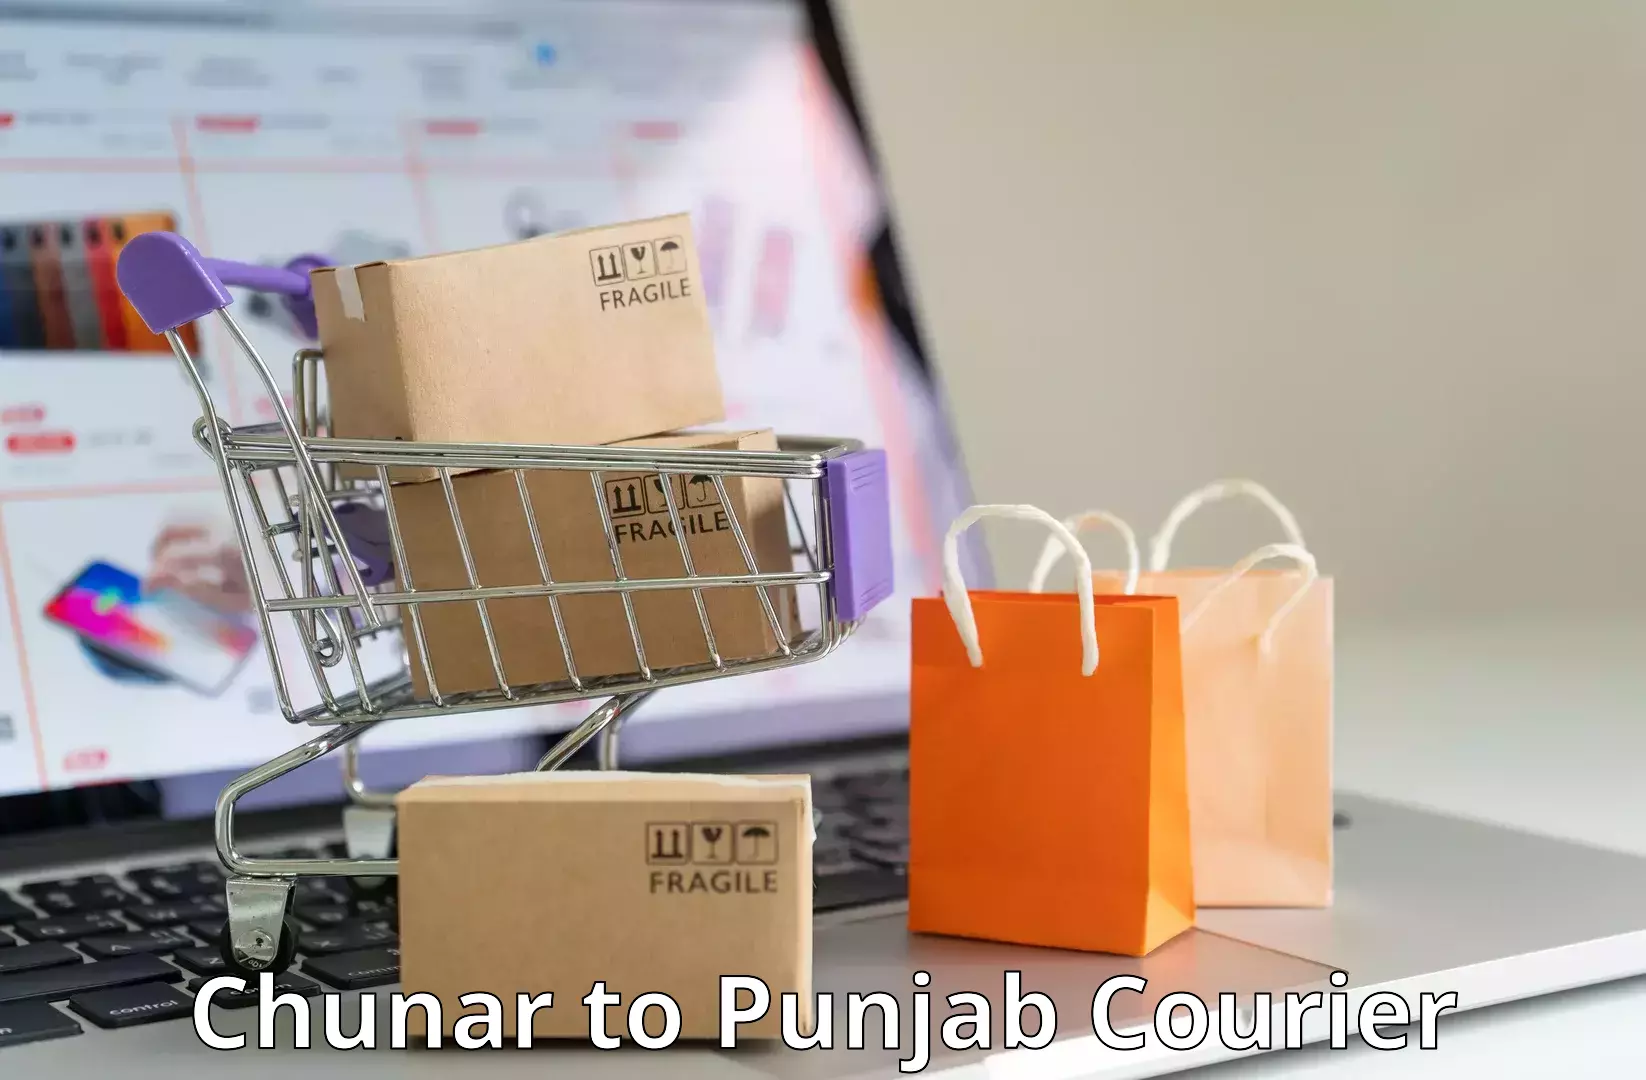 Courier service comparison Chunar to Samana